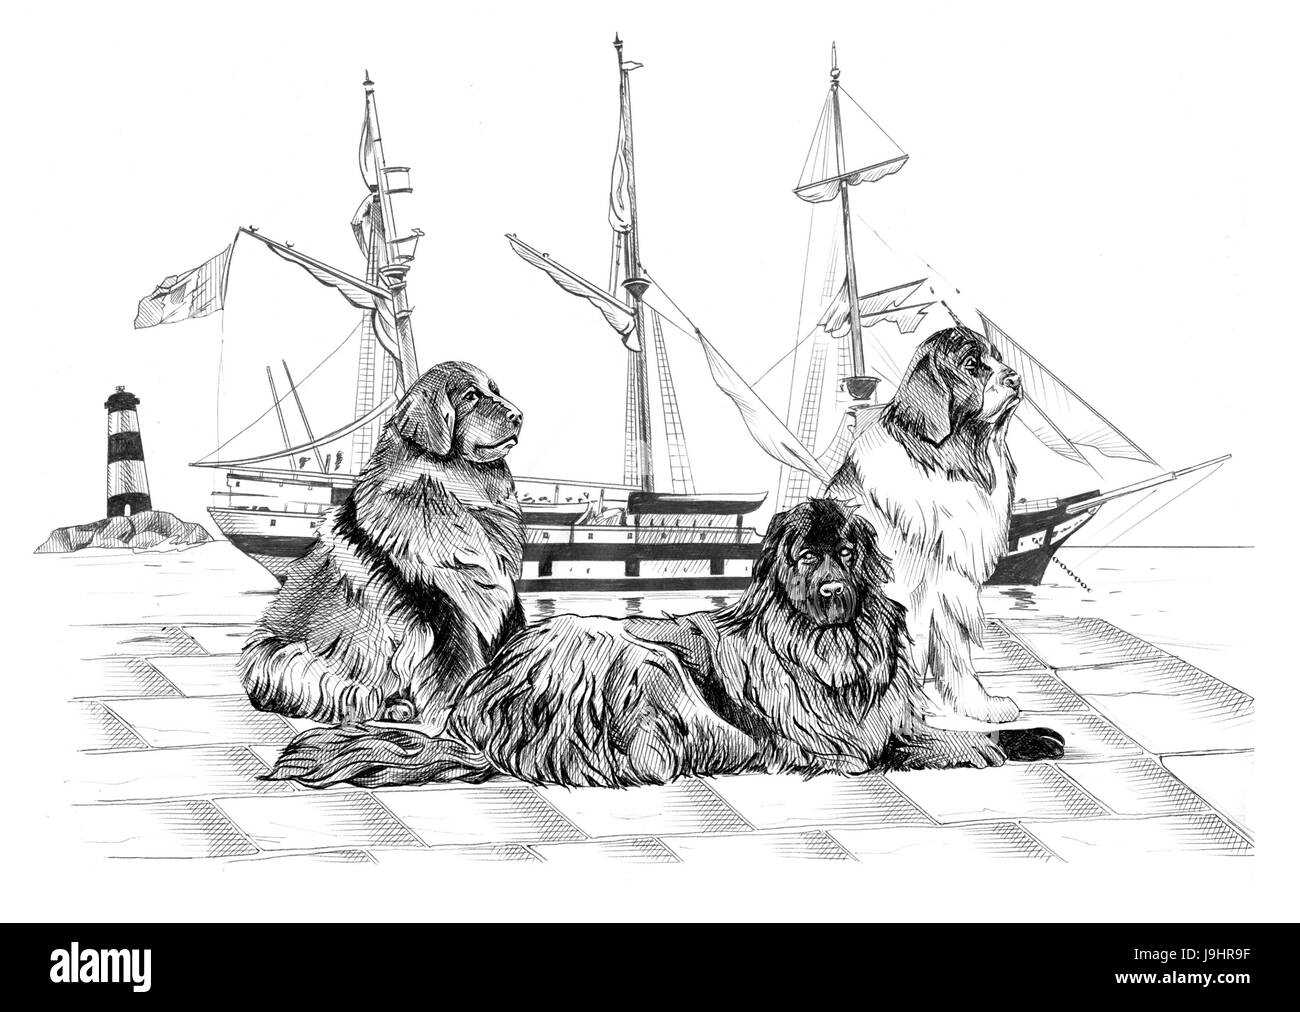 animal, maritime, black, swarthy, jetblack, deep black, sail, dog, Stock Photo